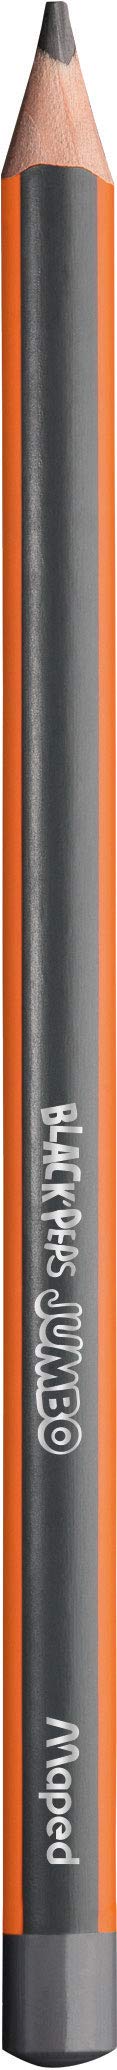 Maped Black Peps Jumbo Pencils  HB 2 [Pack of 12] أقلام رصاص ضخمة من مابيد بلاك بيبس [عبوة من 12 قطعة]